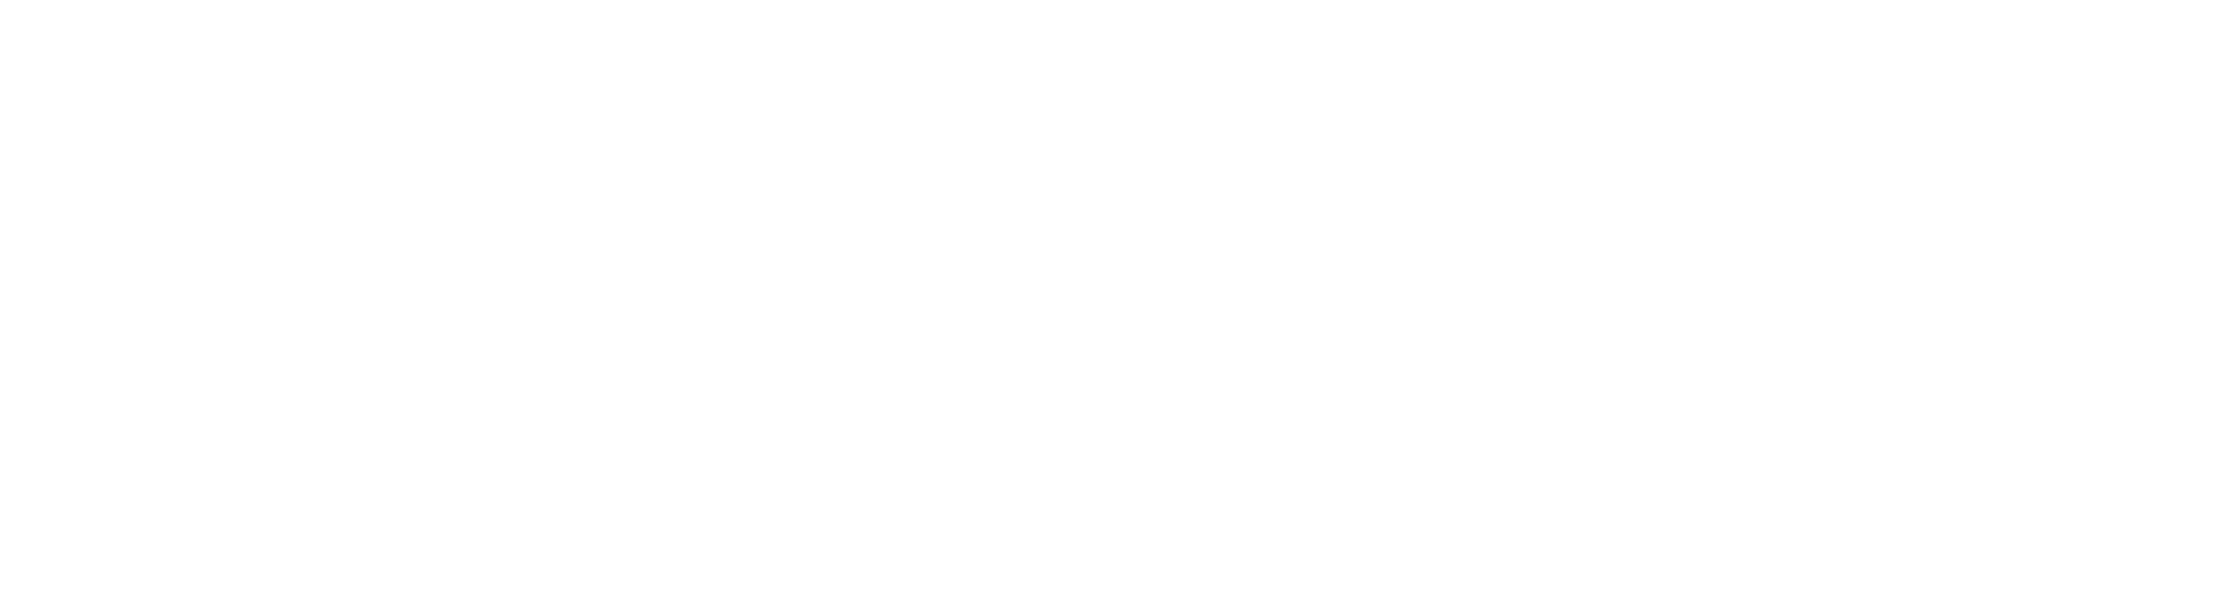 Resolve Tech Solutions